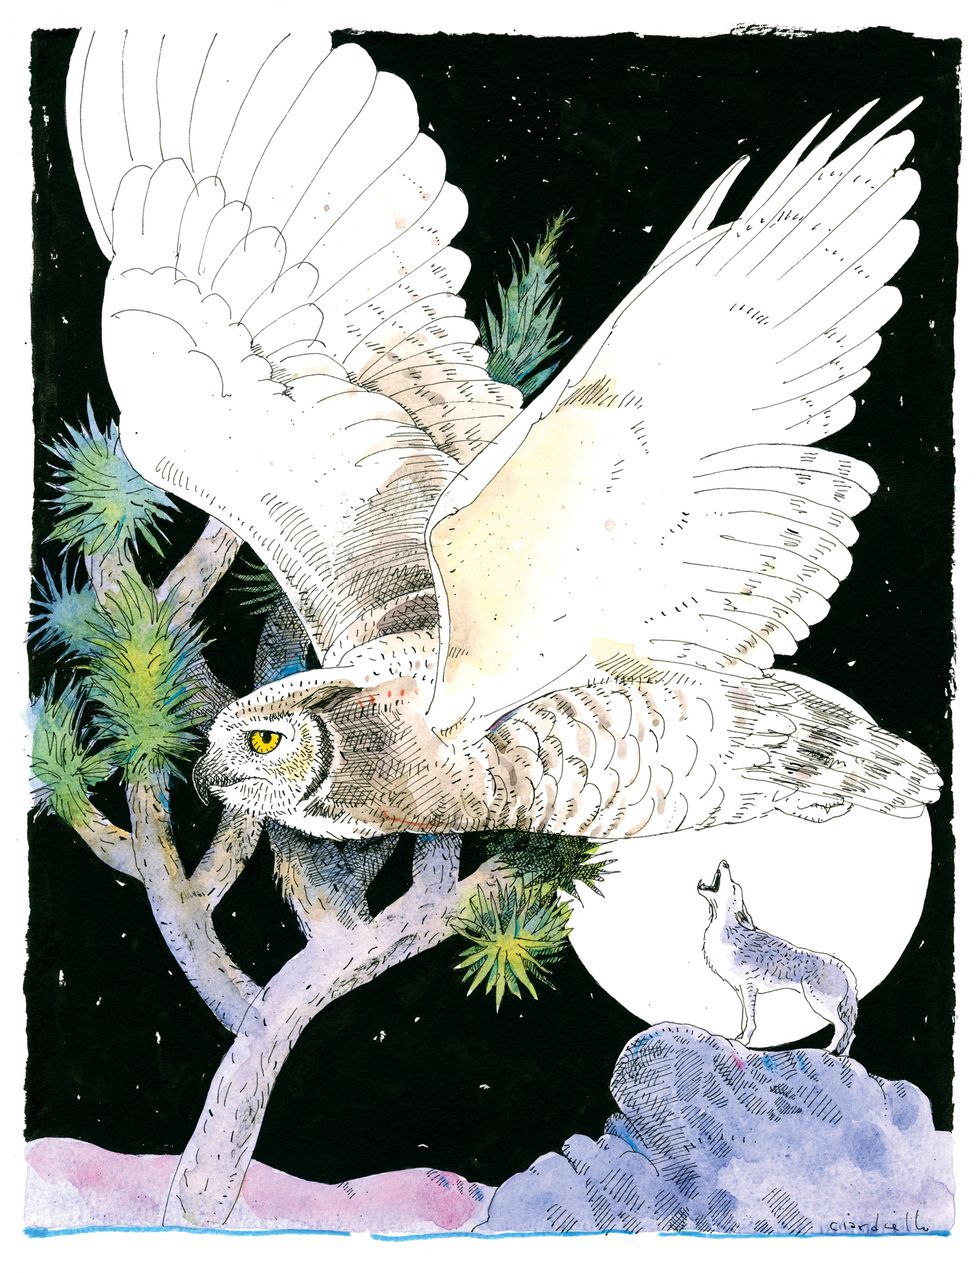 ken layne, desert oracle, illustration, joe ciardiello, night owl